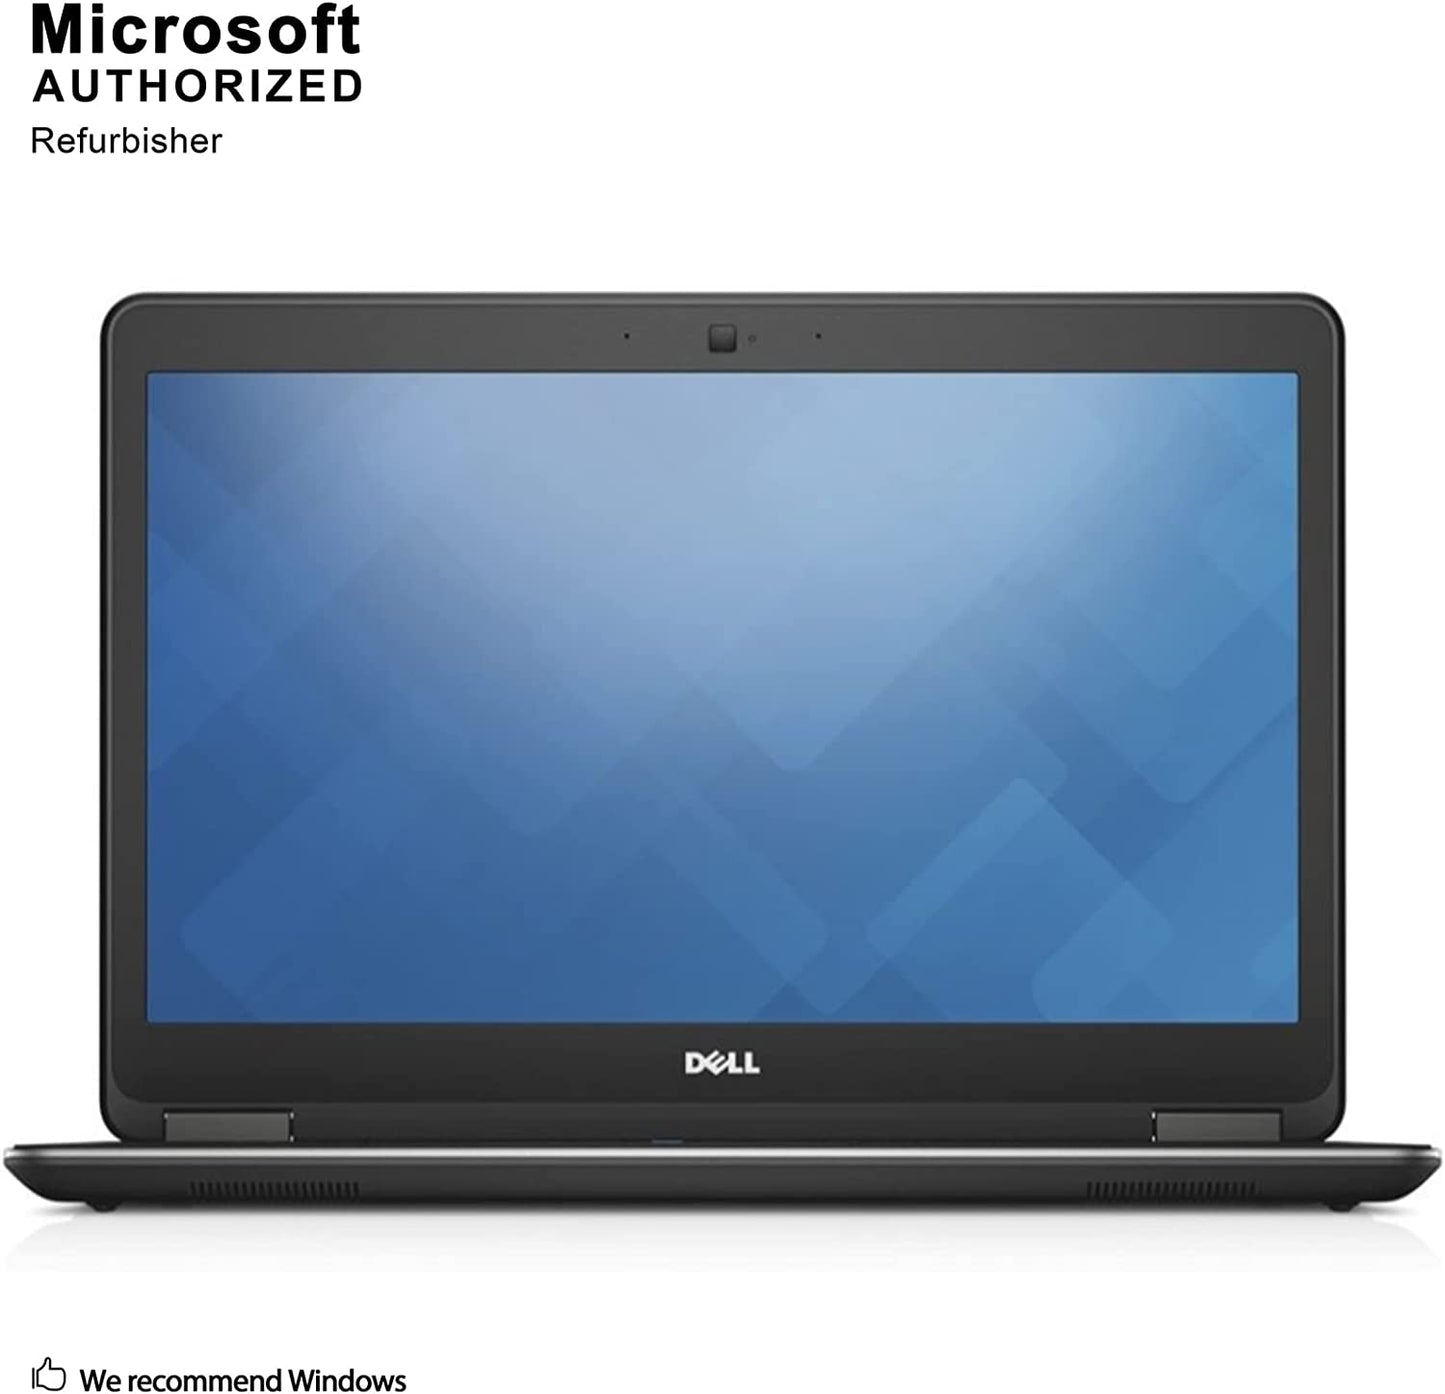 Dell Latitude E7450 UltraBook FHD (1920 x 1080) Business Laptop Intel Dual Core i7-5600U, 8GB Ram, 256GB Solid State SSD, HDMI, Camera, WIFI, Win 10 Pro (Renewed)